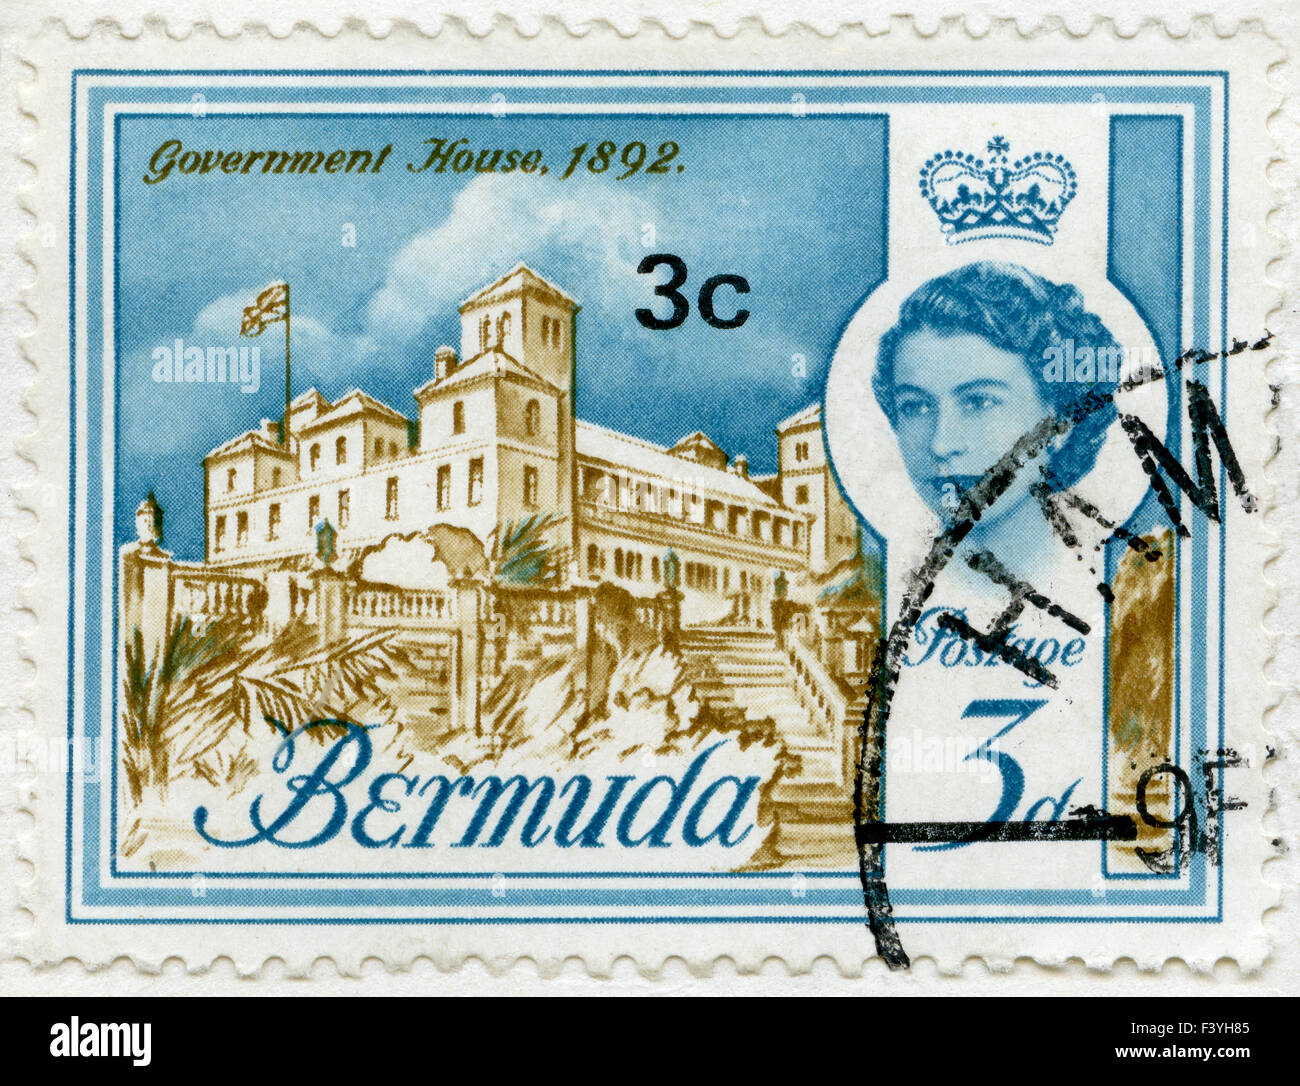 BERMUDA - 1962: mostra la sede del Governo, 1892 Foto Stock